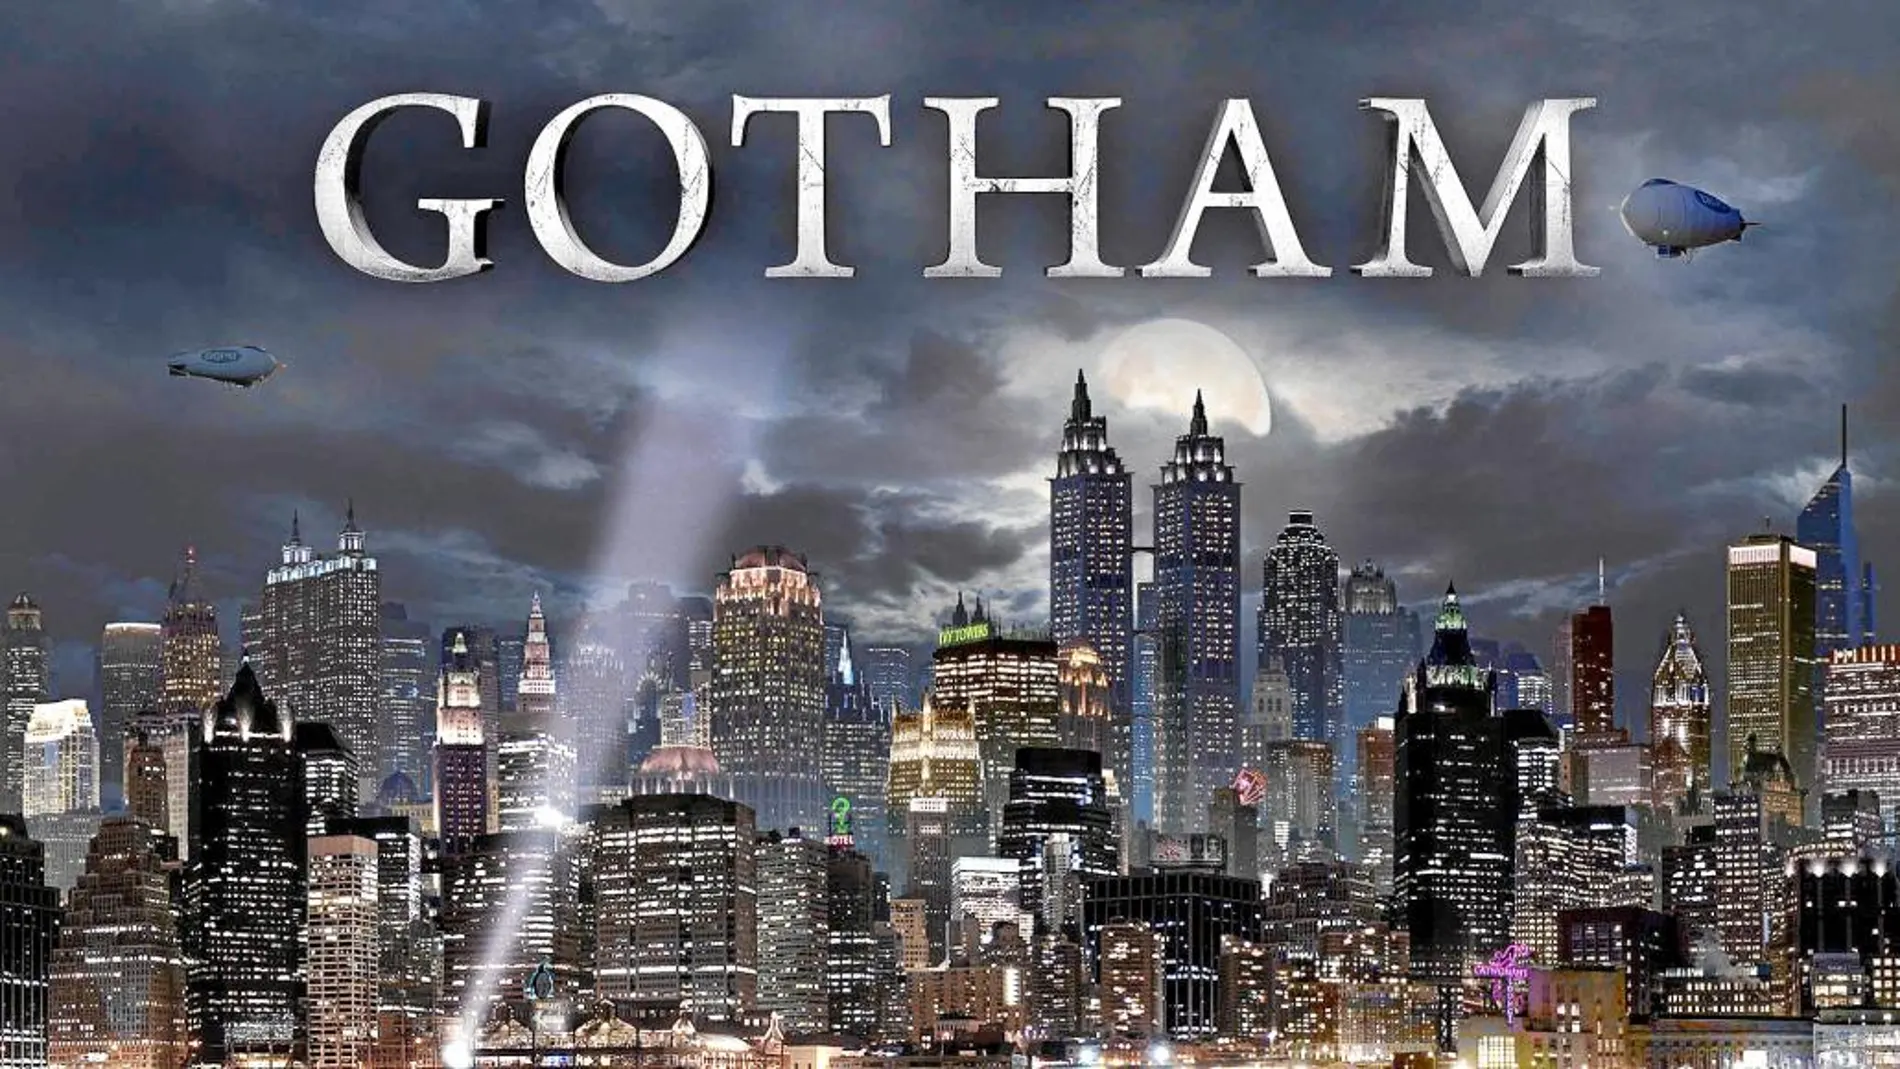 «Gotham»: Repesca para la ciudad de Batman